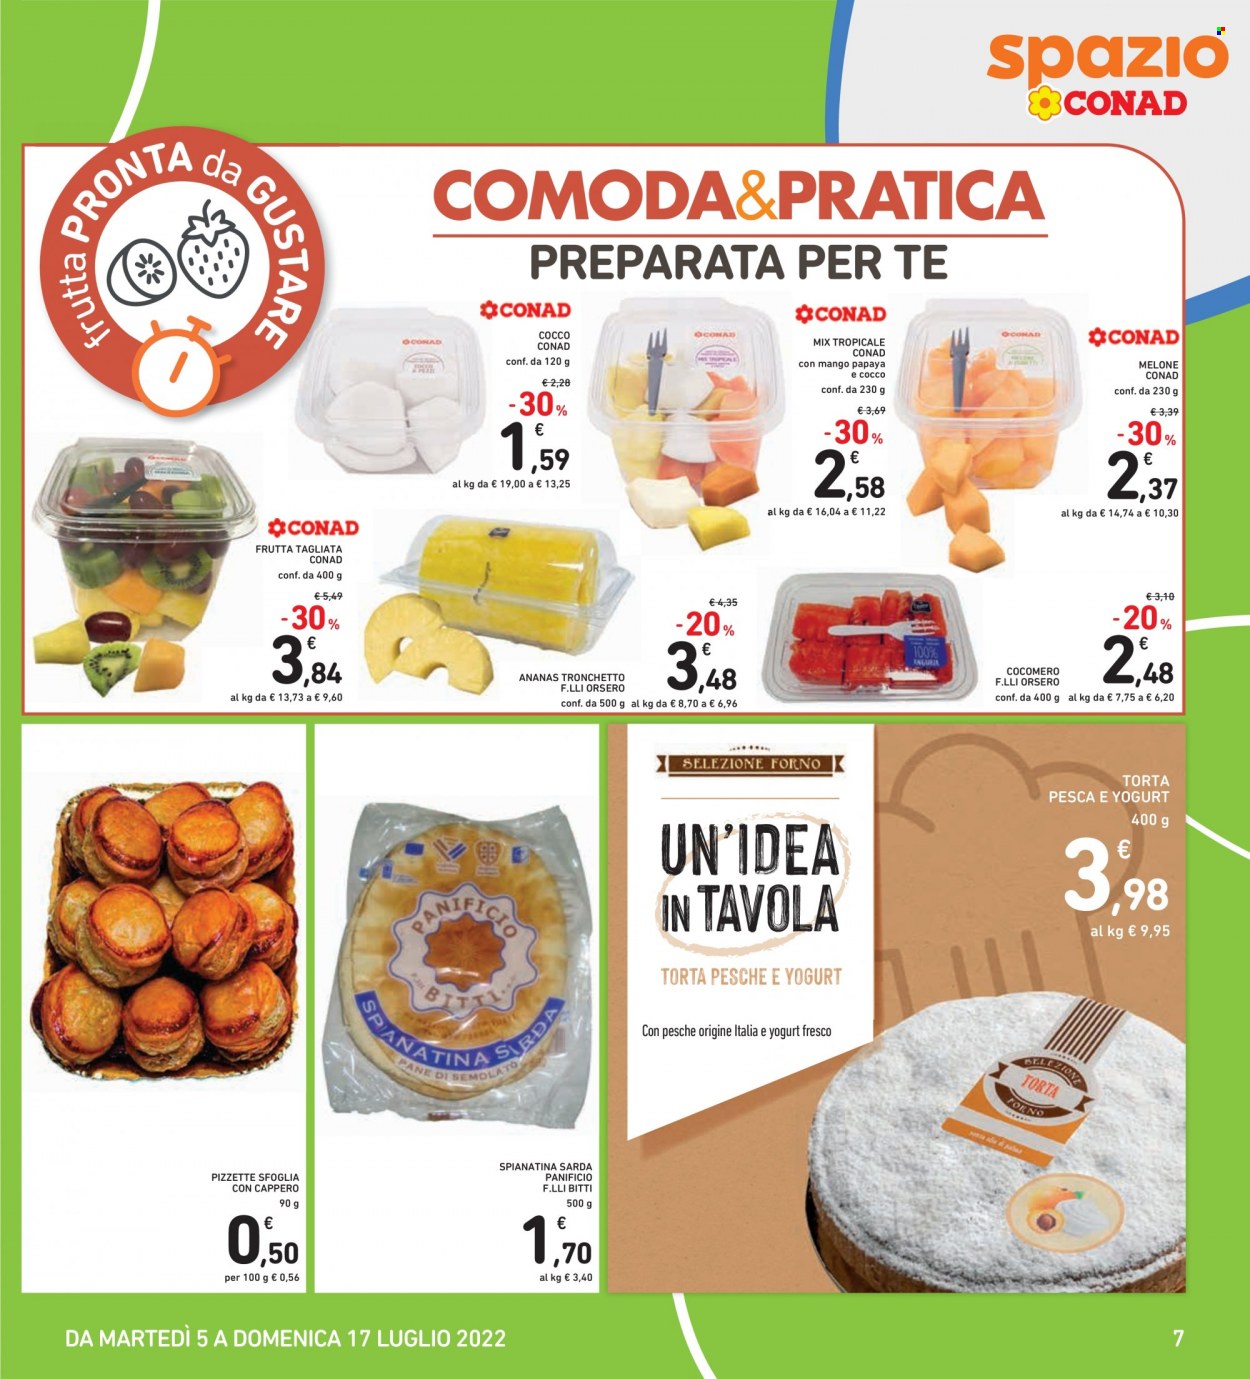 thumbnail - Volantino Conad - 5/7/2022 - 17/7/2022 - Prodotti in offerta - pane, torta, melone, tagliata, yogurt. Pagina 7.